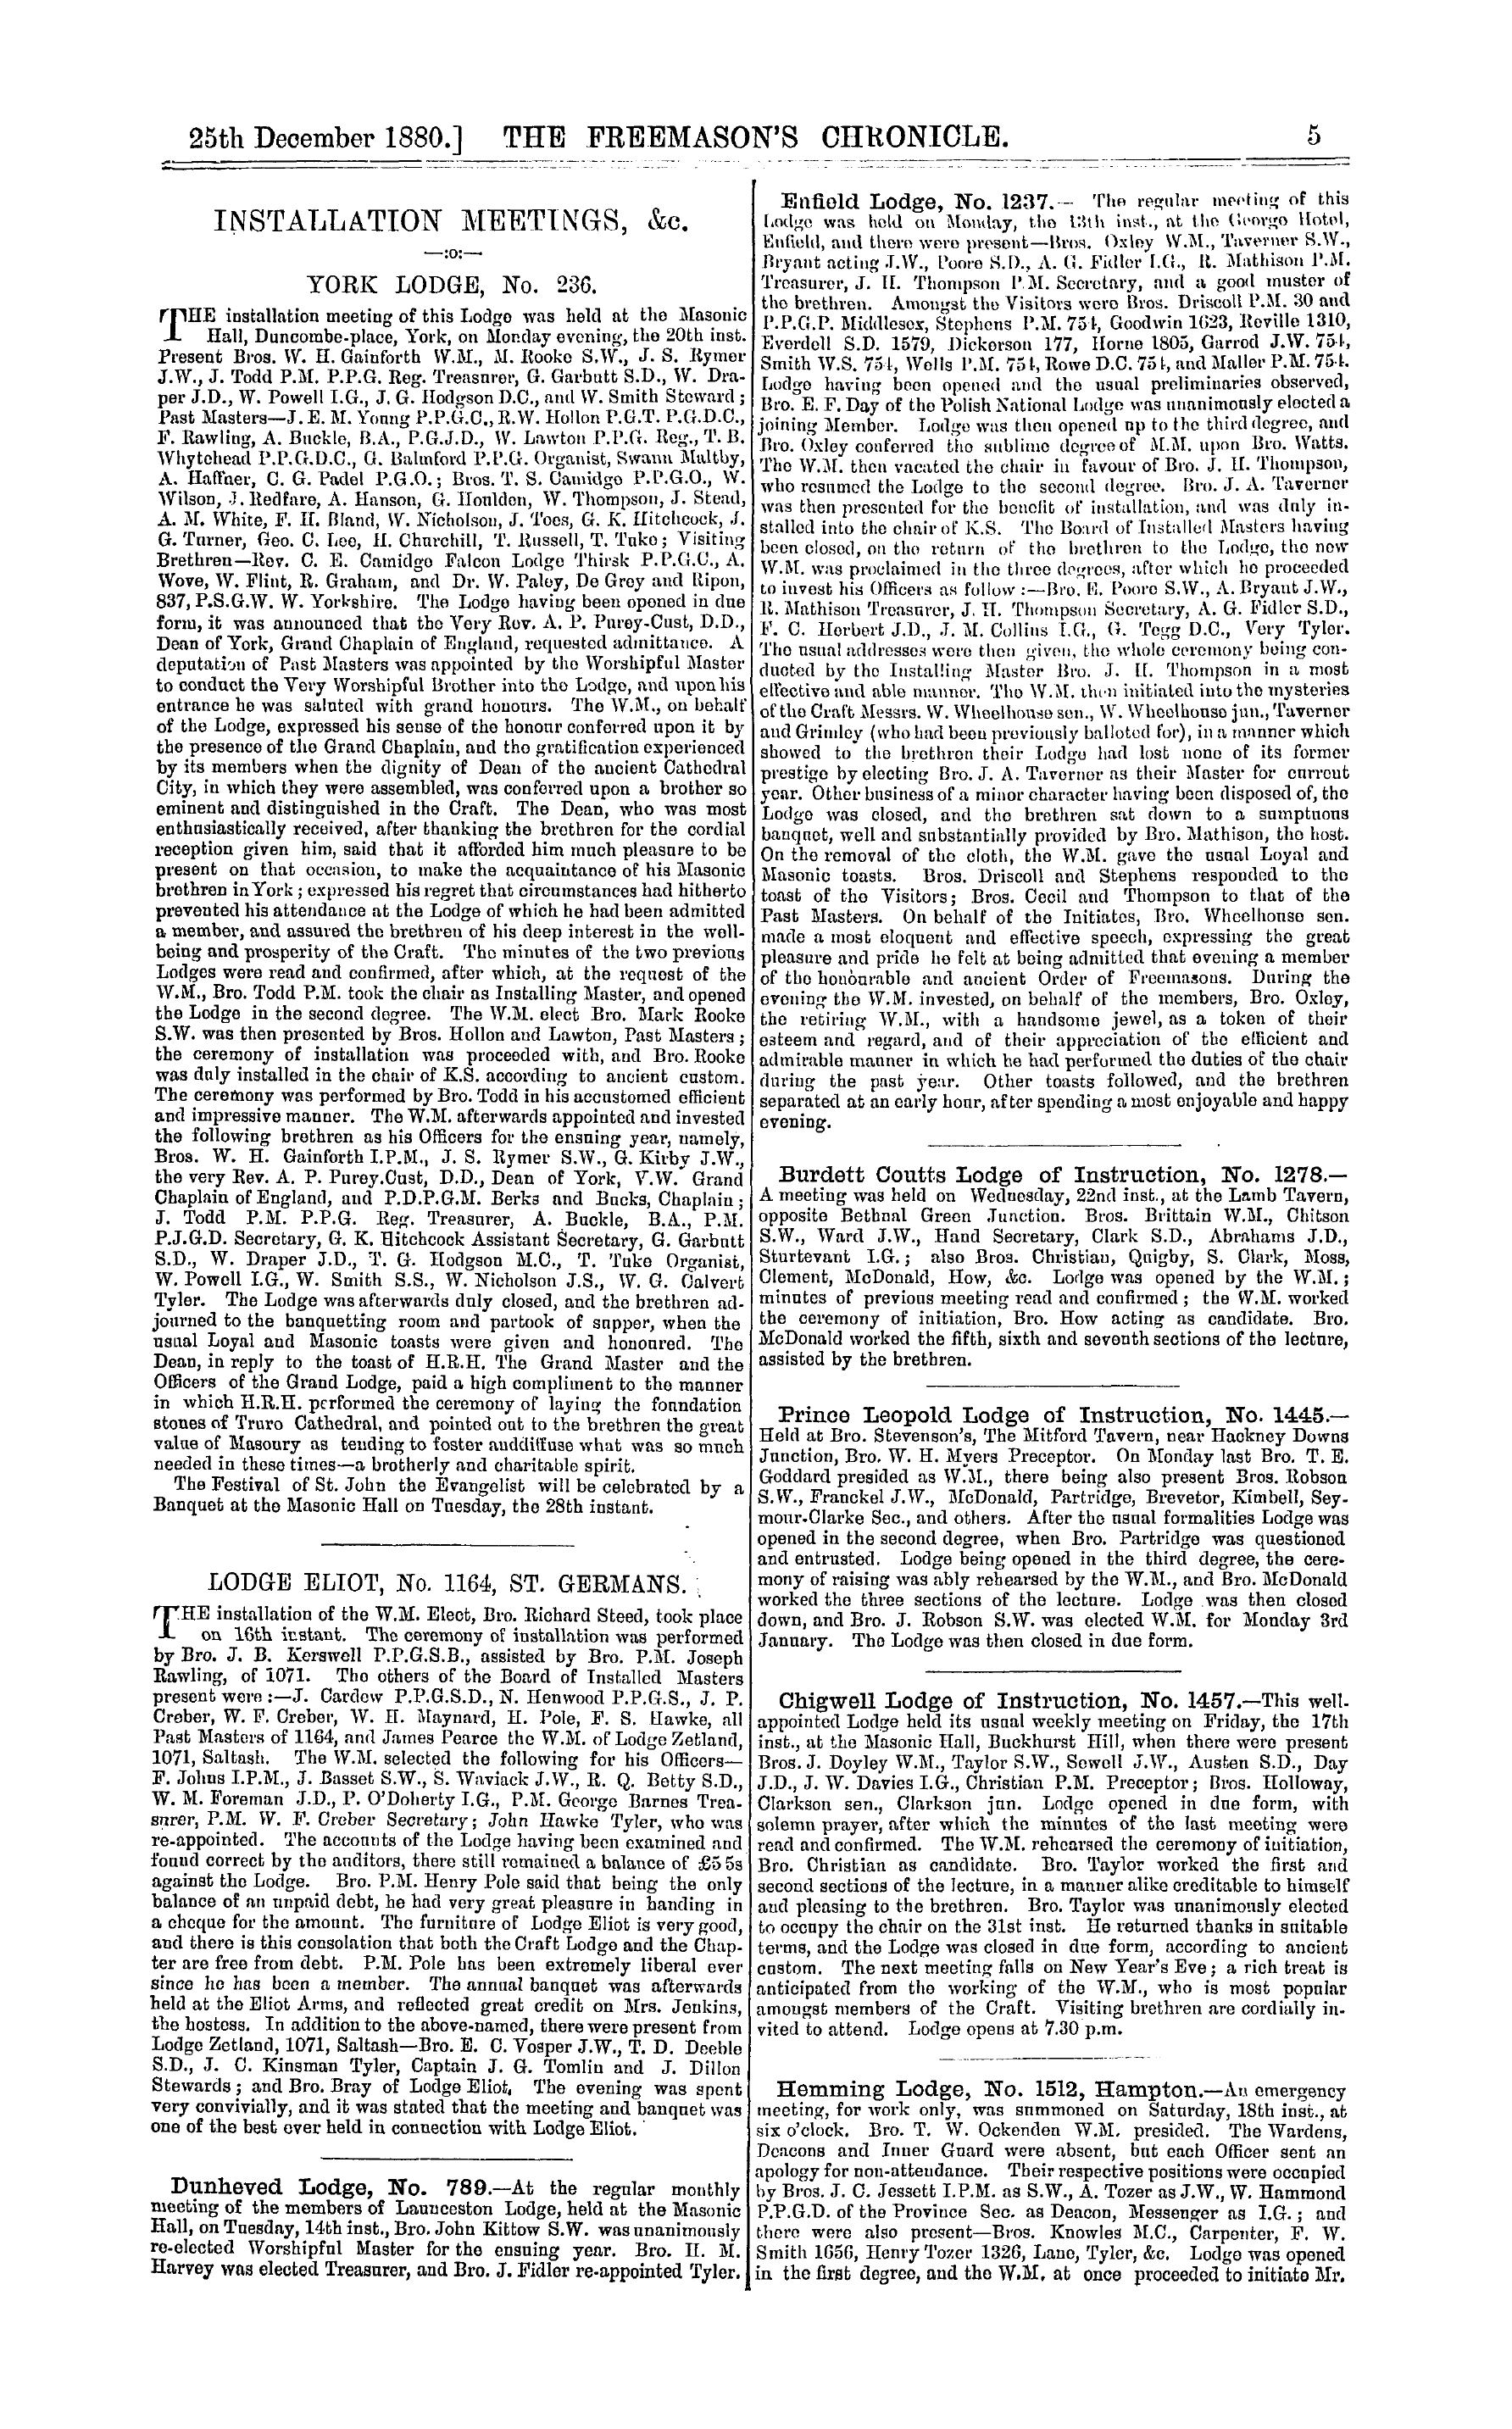 The Freemason's Chronicle: 1880-12-25 - Lodge Eliot, No. 1164, St. Germans.